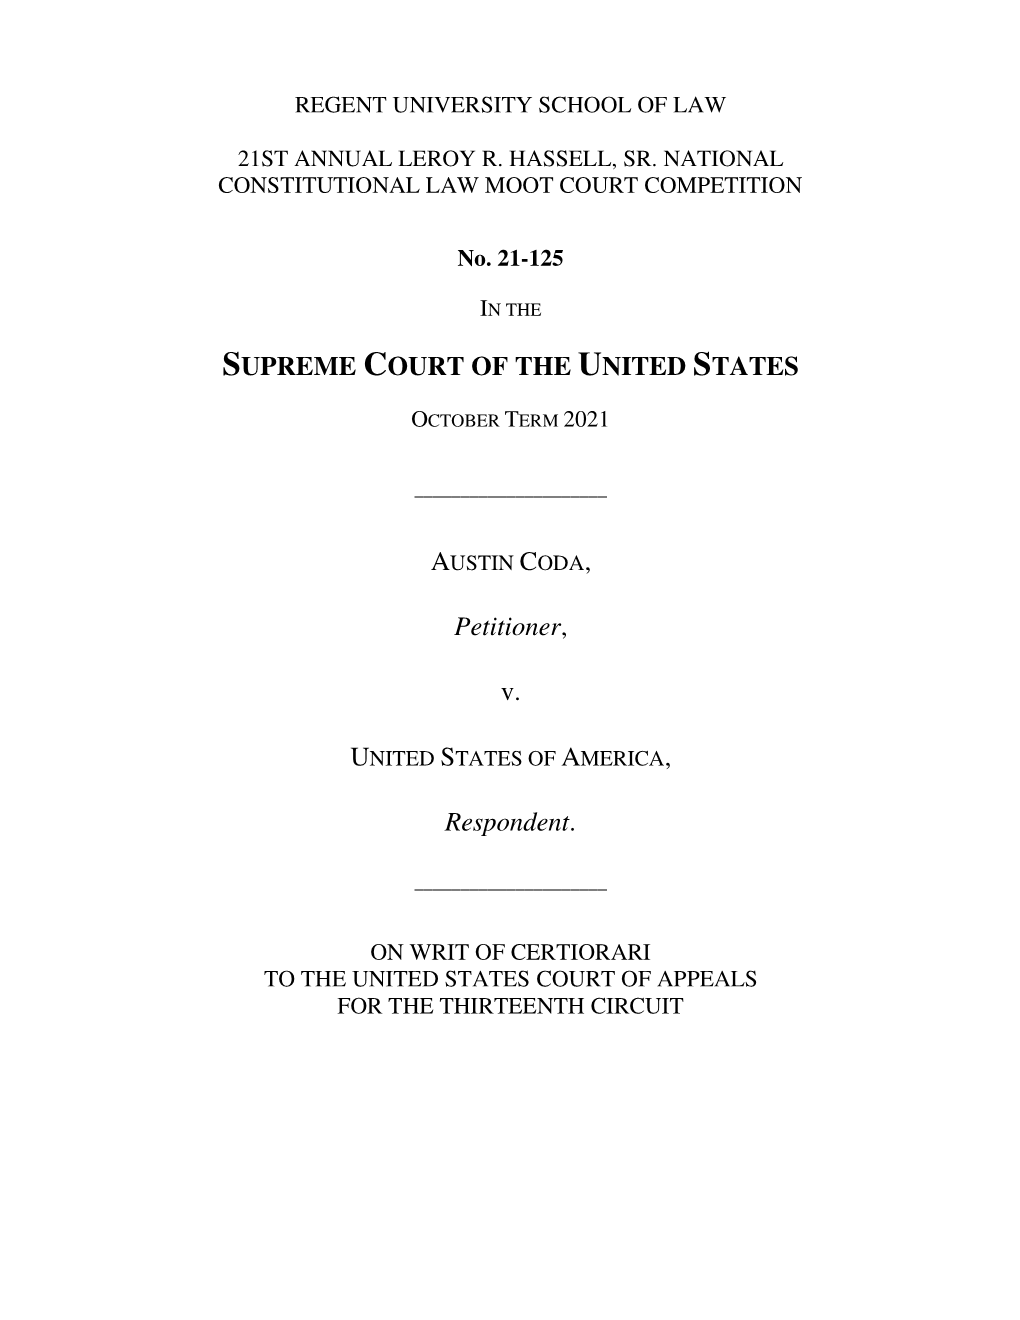 SUPREME COURT of the UNITED STATES Petitioner, V. Respondent